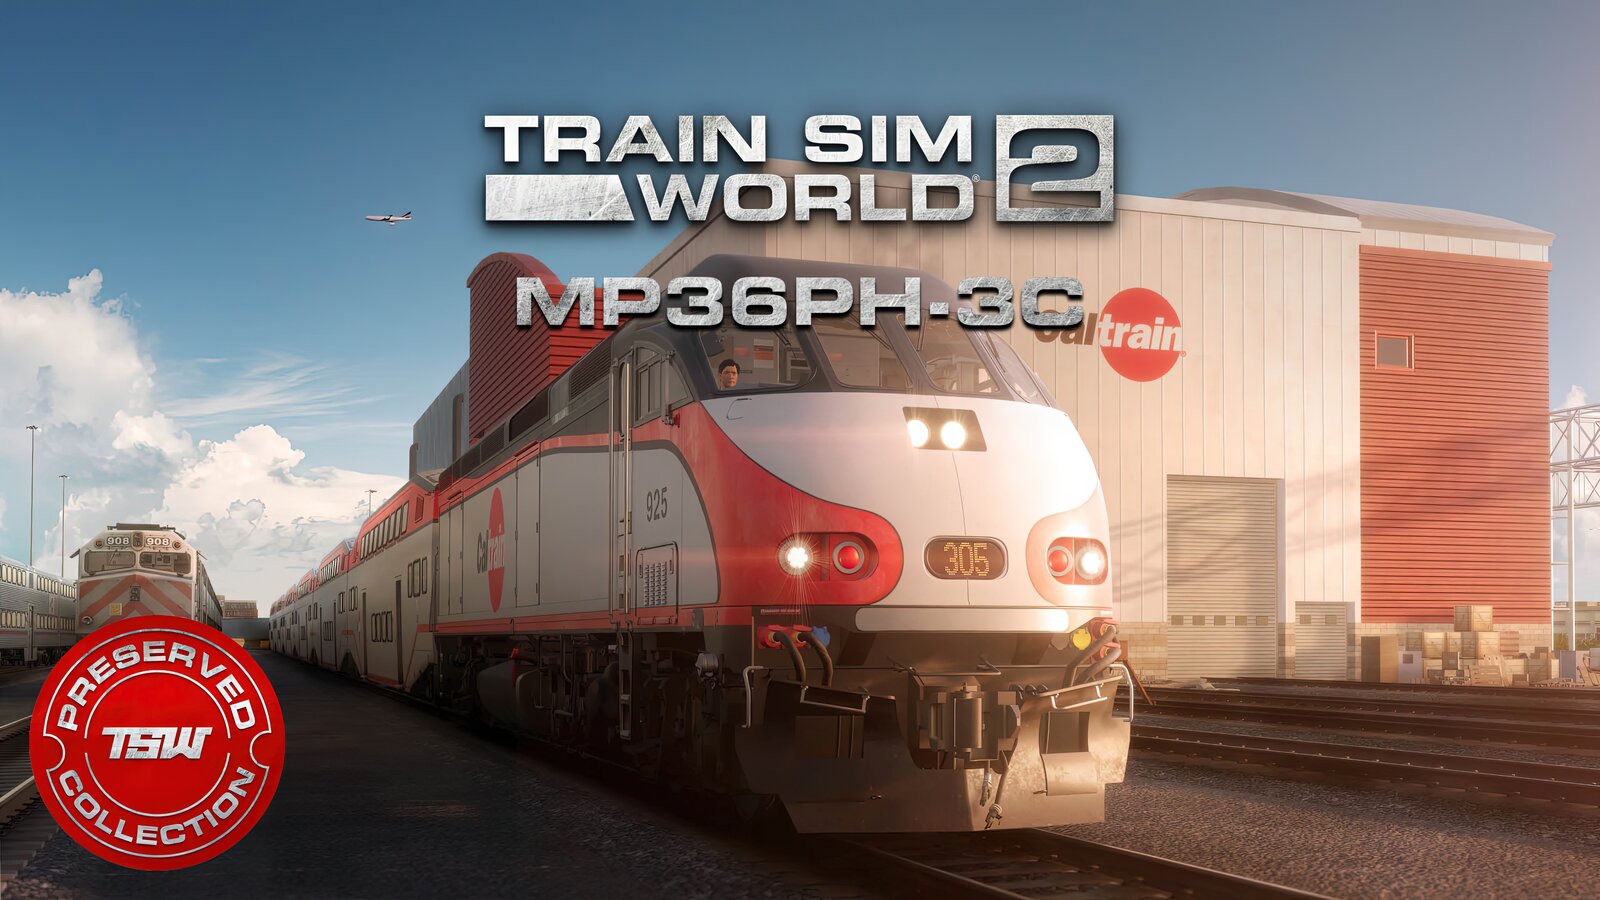 Train Sim World 2 - Caltrain MP36PH-3C ‘Baby Bullet’ Loco